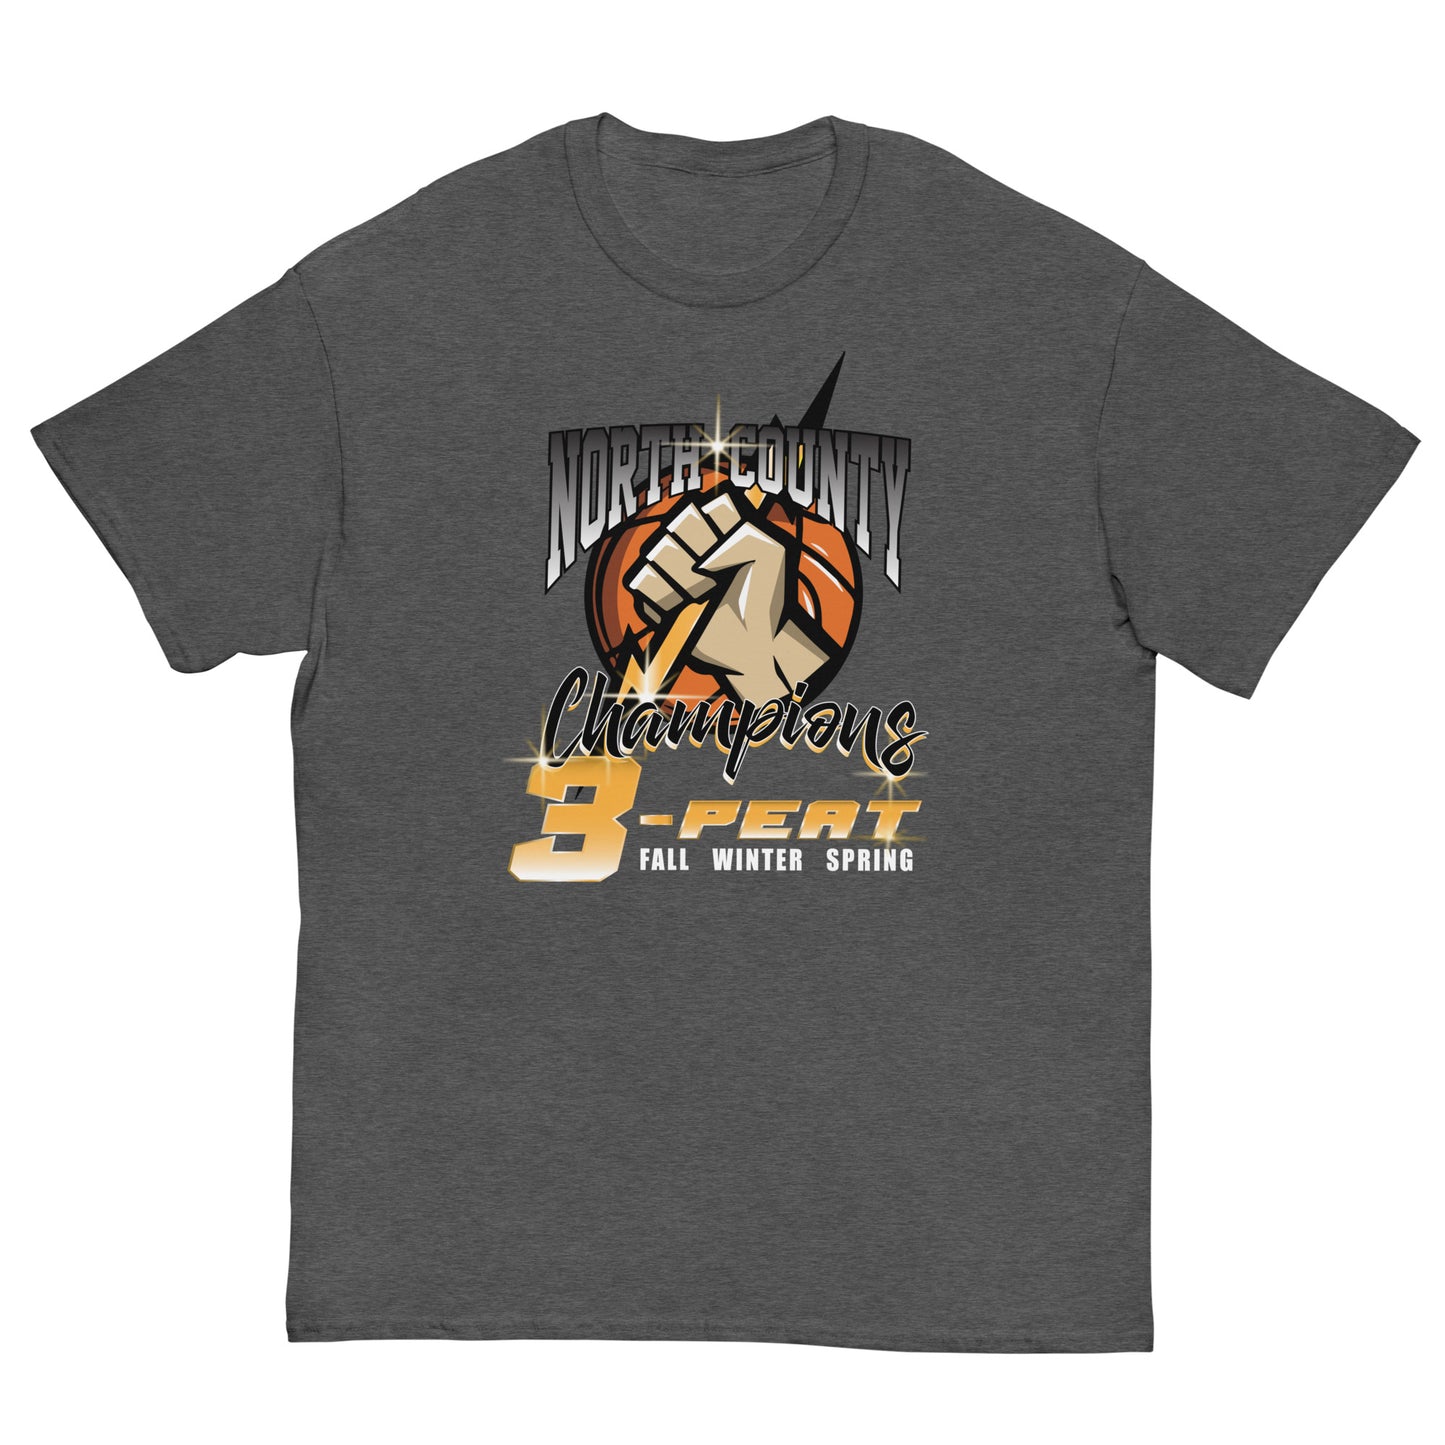 Adult 3 Peat Championship Shirt